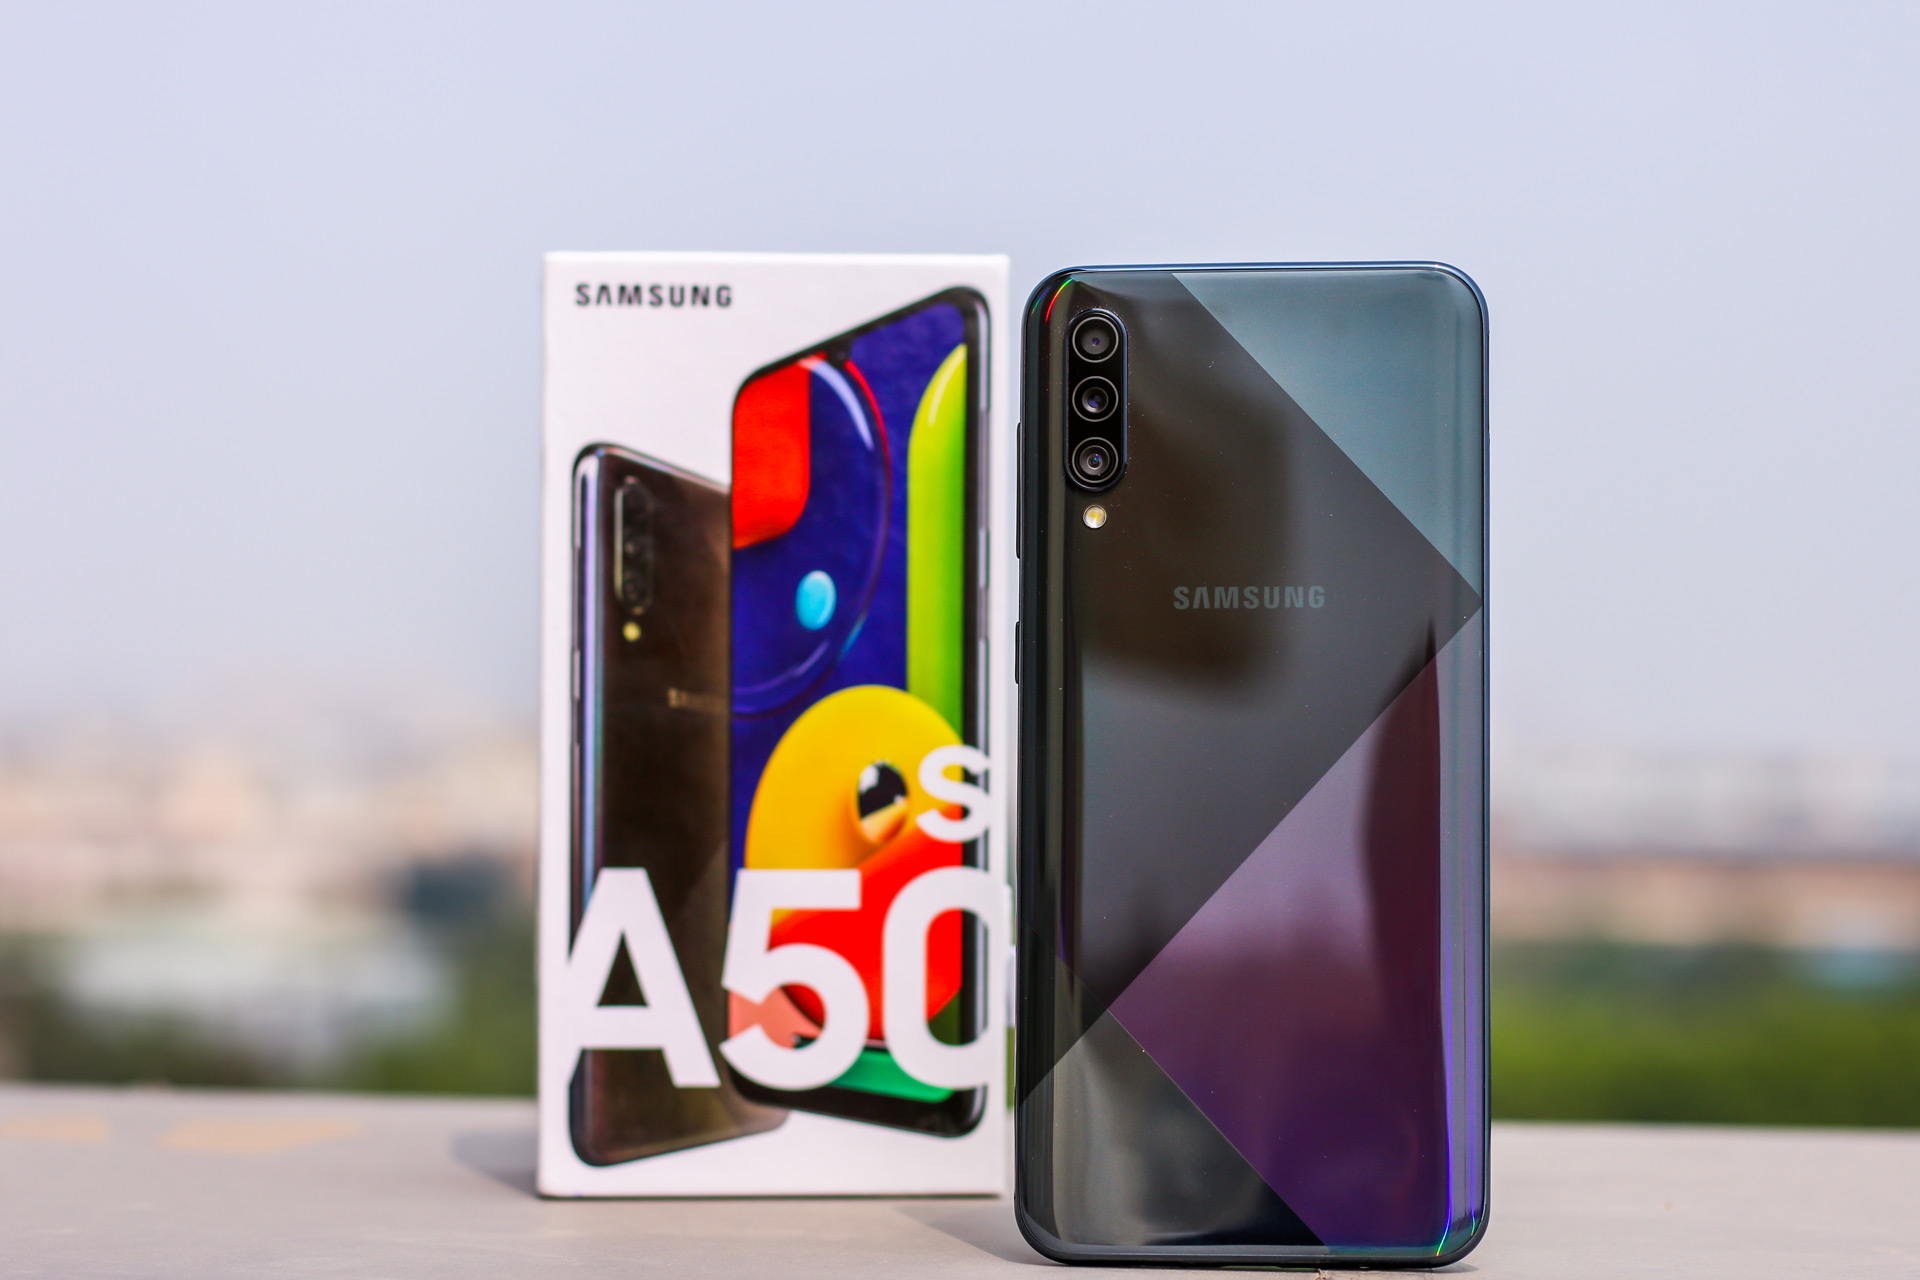 Update A50 Samsung Ki Price Review